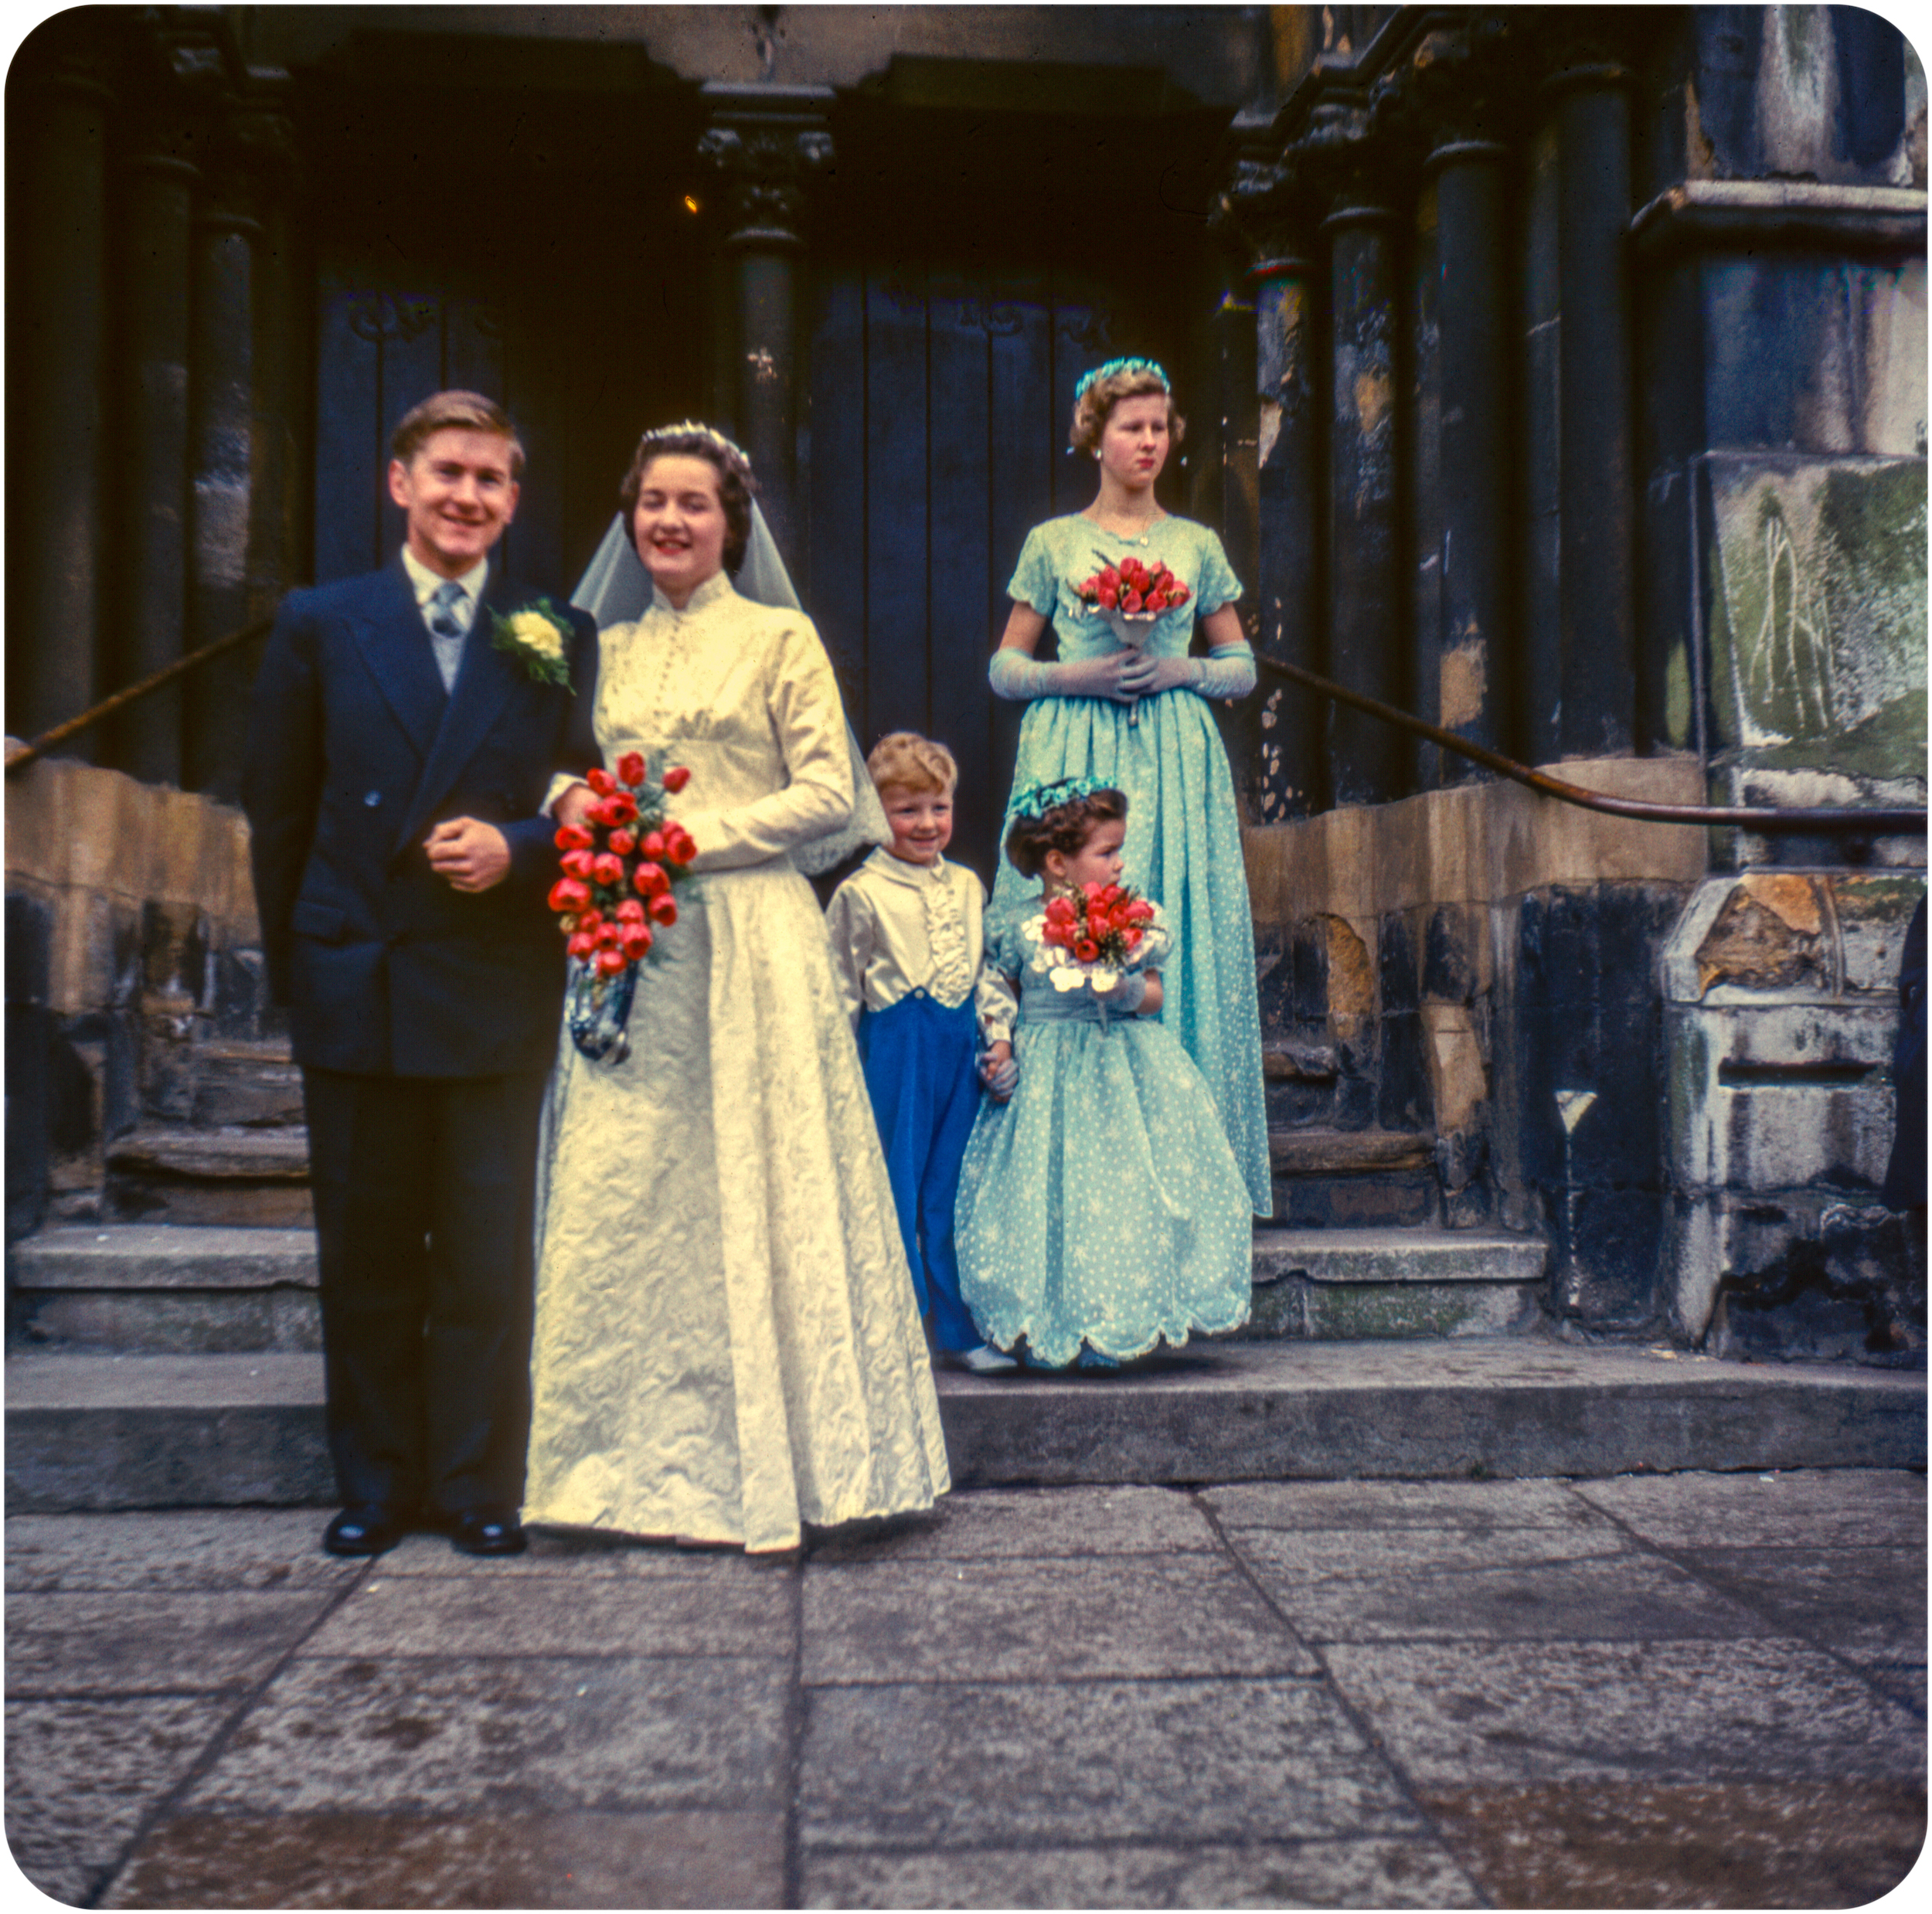 Brian & Daphne's Wedding - St. Ives - April 4th 1958